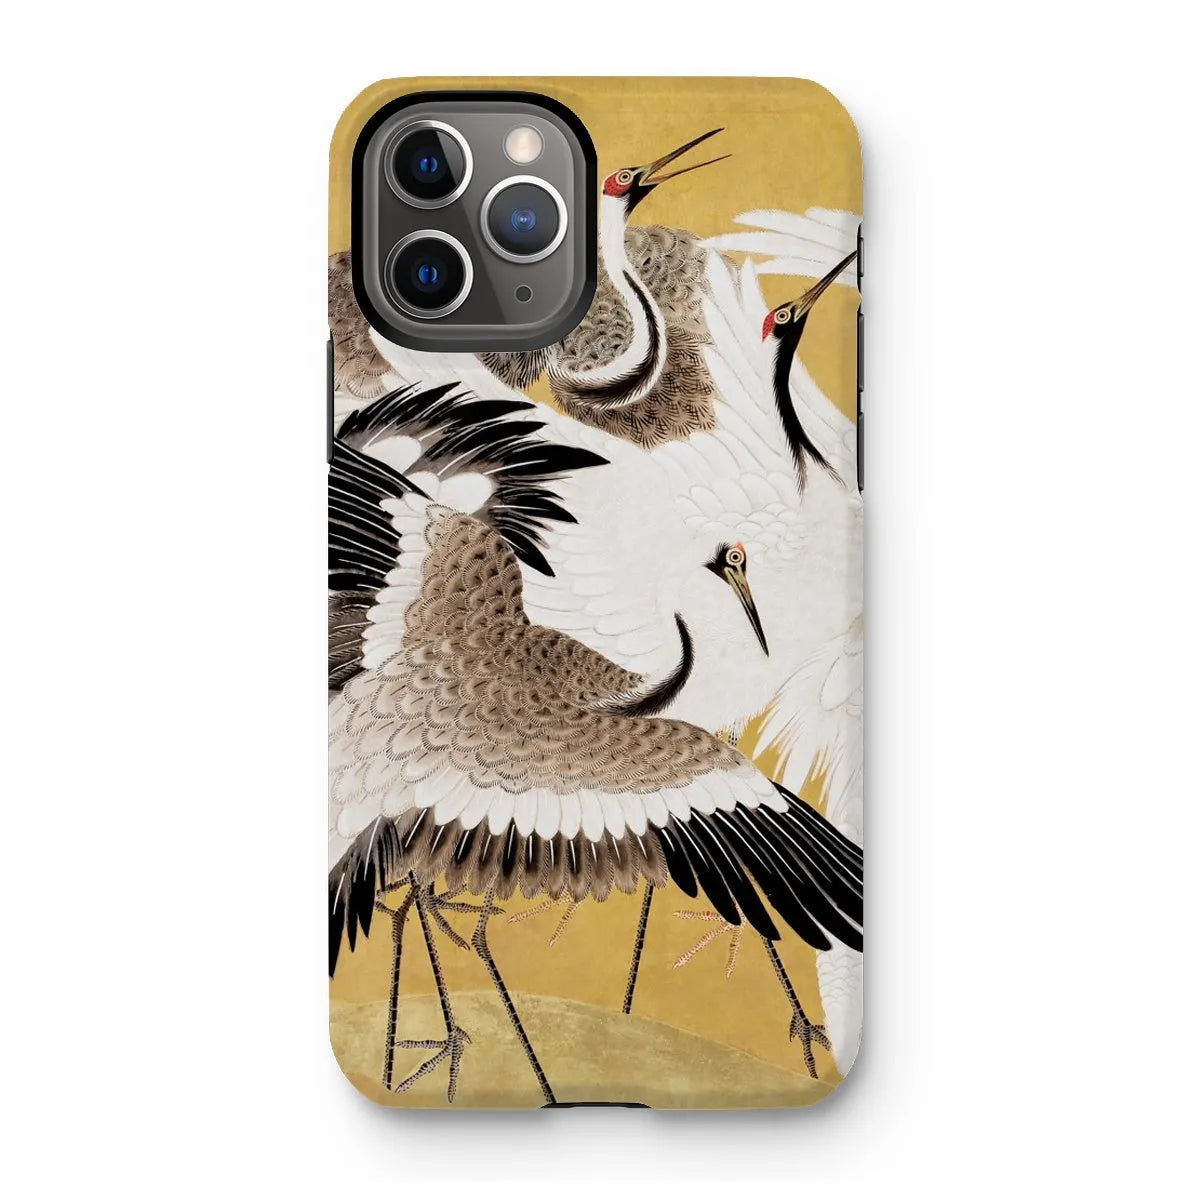 Flock Of Cranes Japanese Bird Art Phone Case - Ishida Yūtei - Iphone 11 Pro / Matte - Mobile Phone Cases - Aesthetic